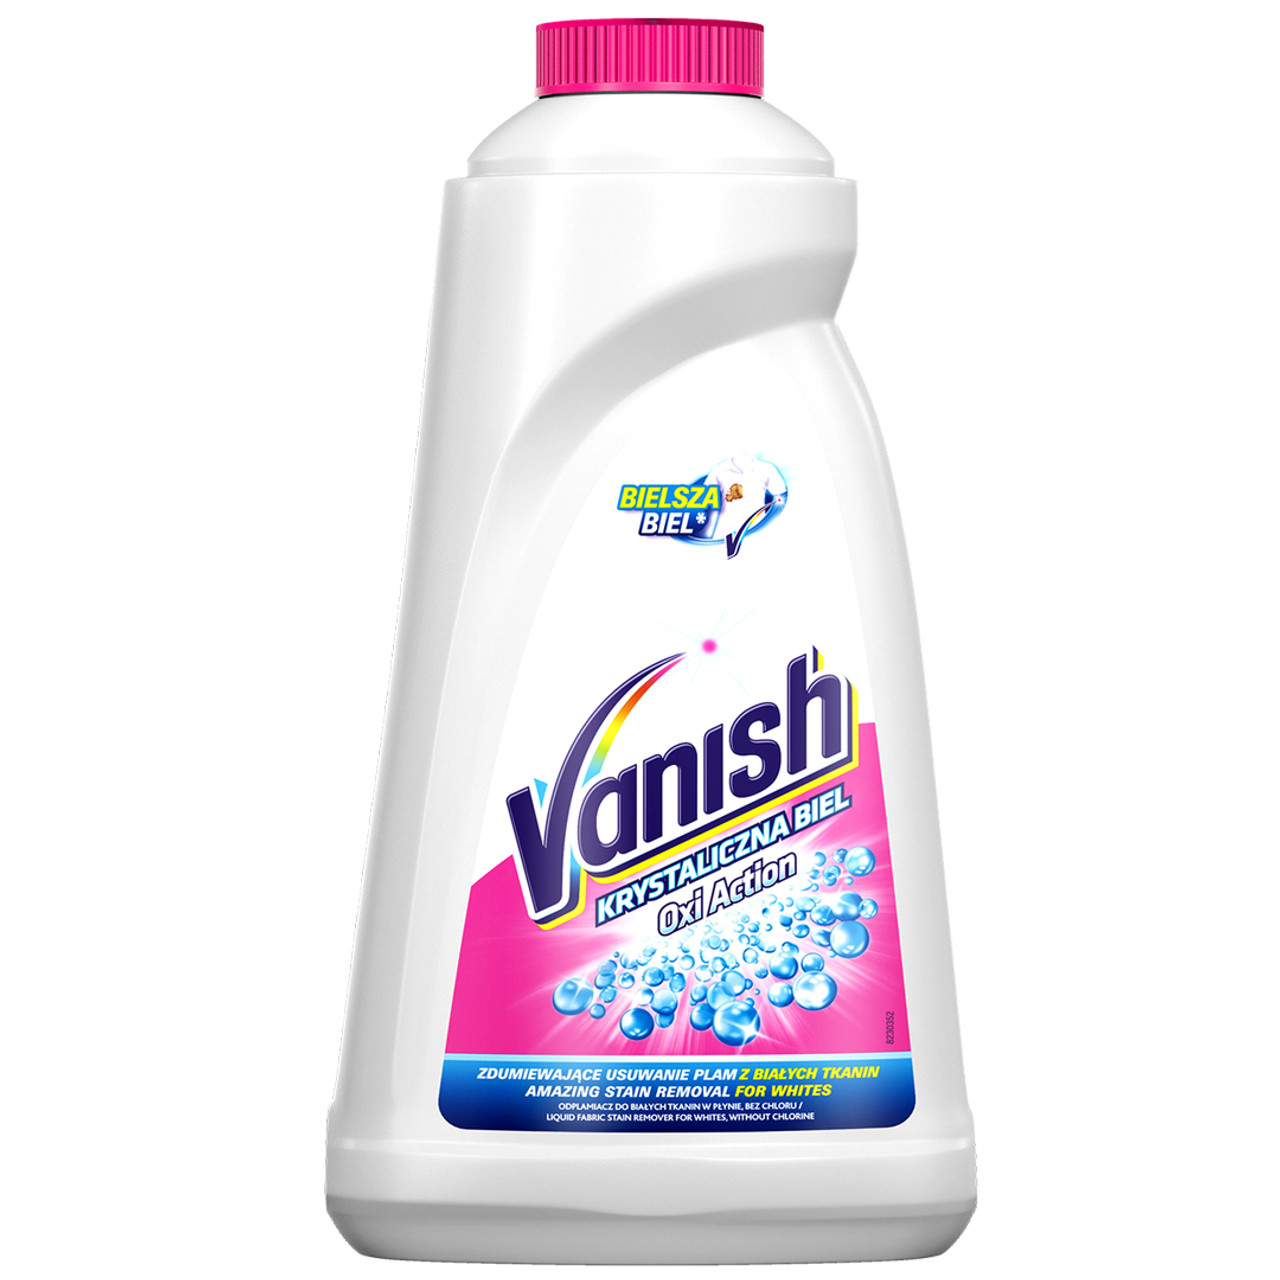 Buy Vanish Crystal White Laundry Stain Remover Liquid for White